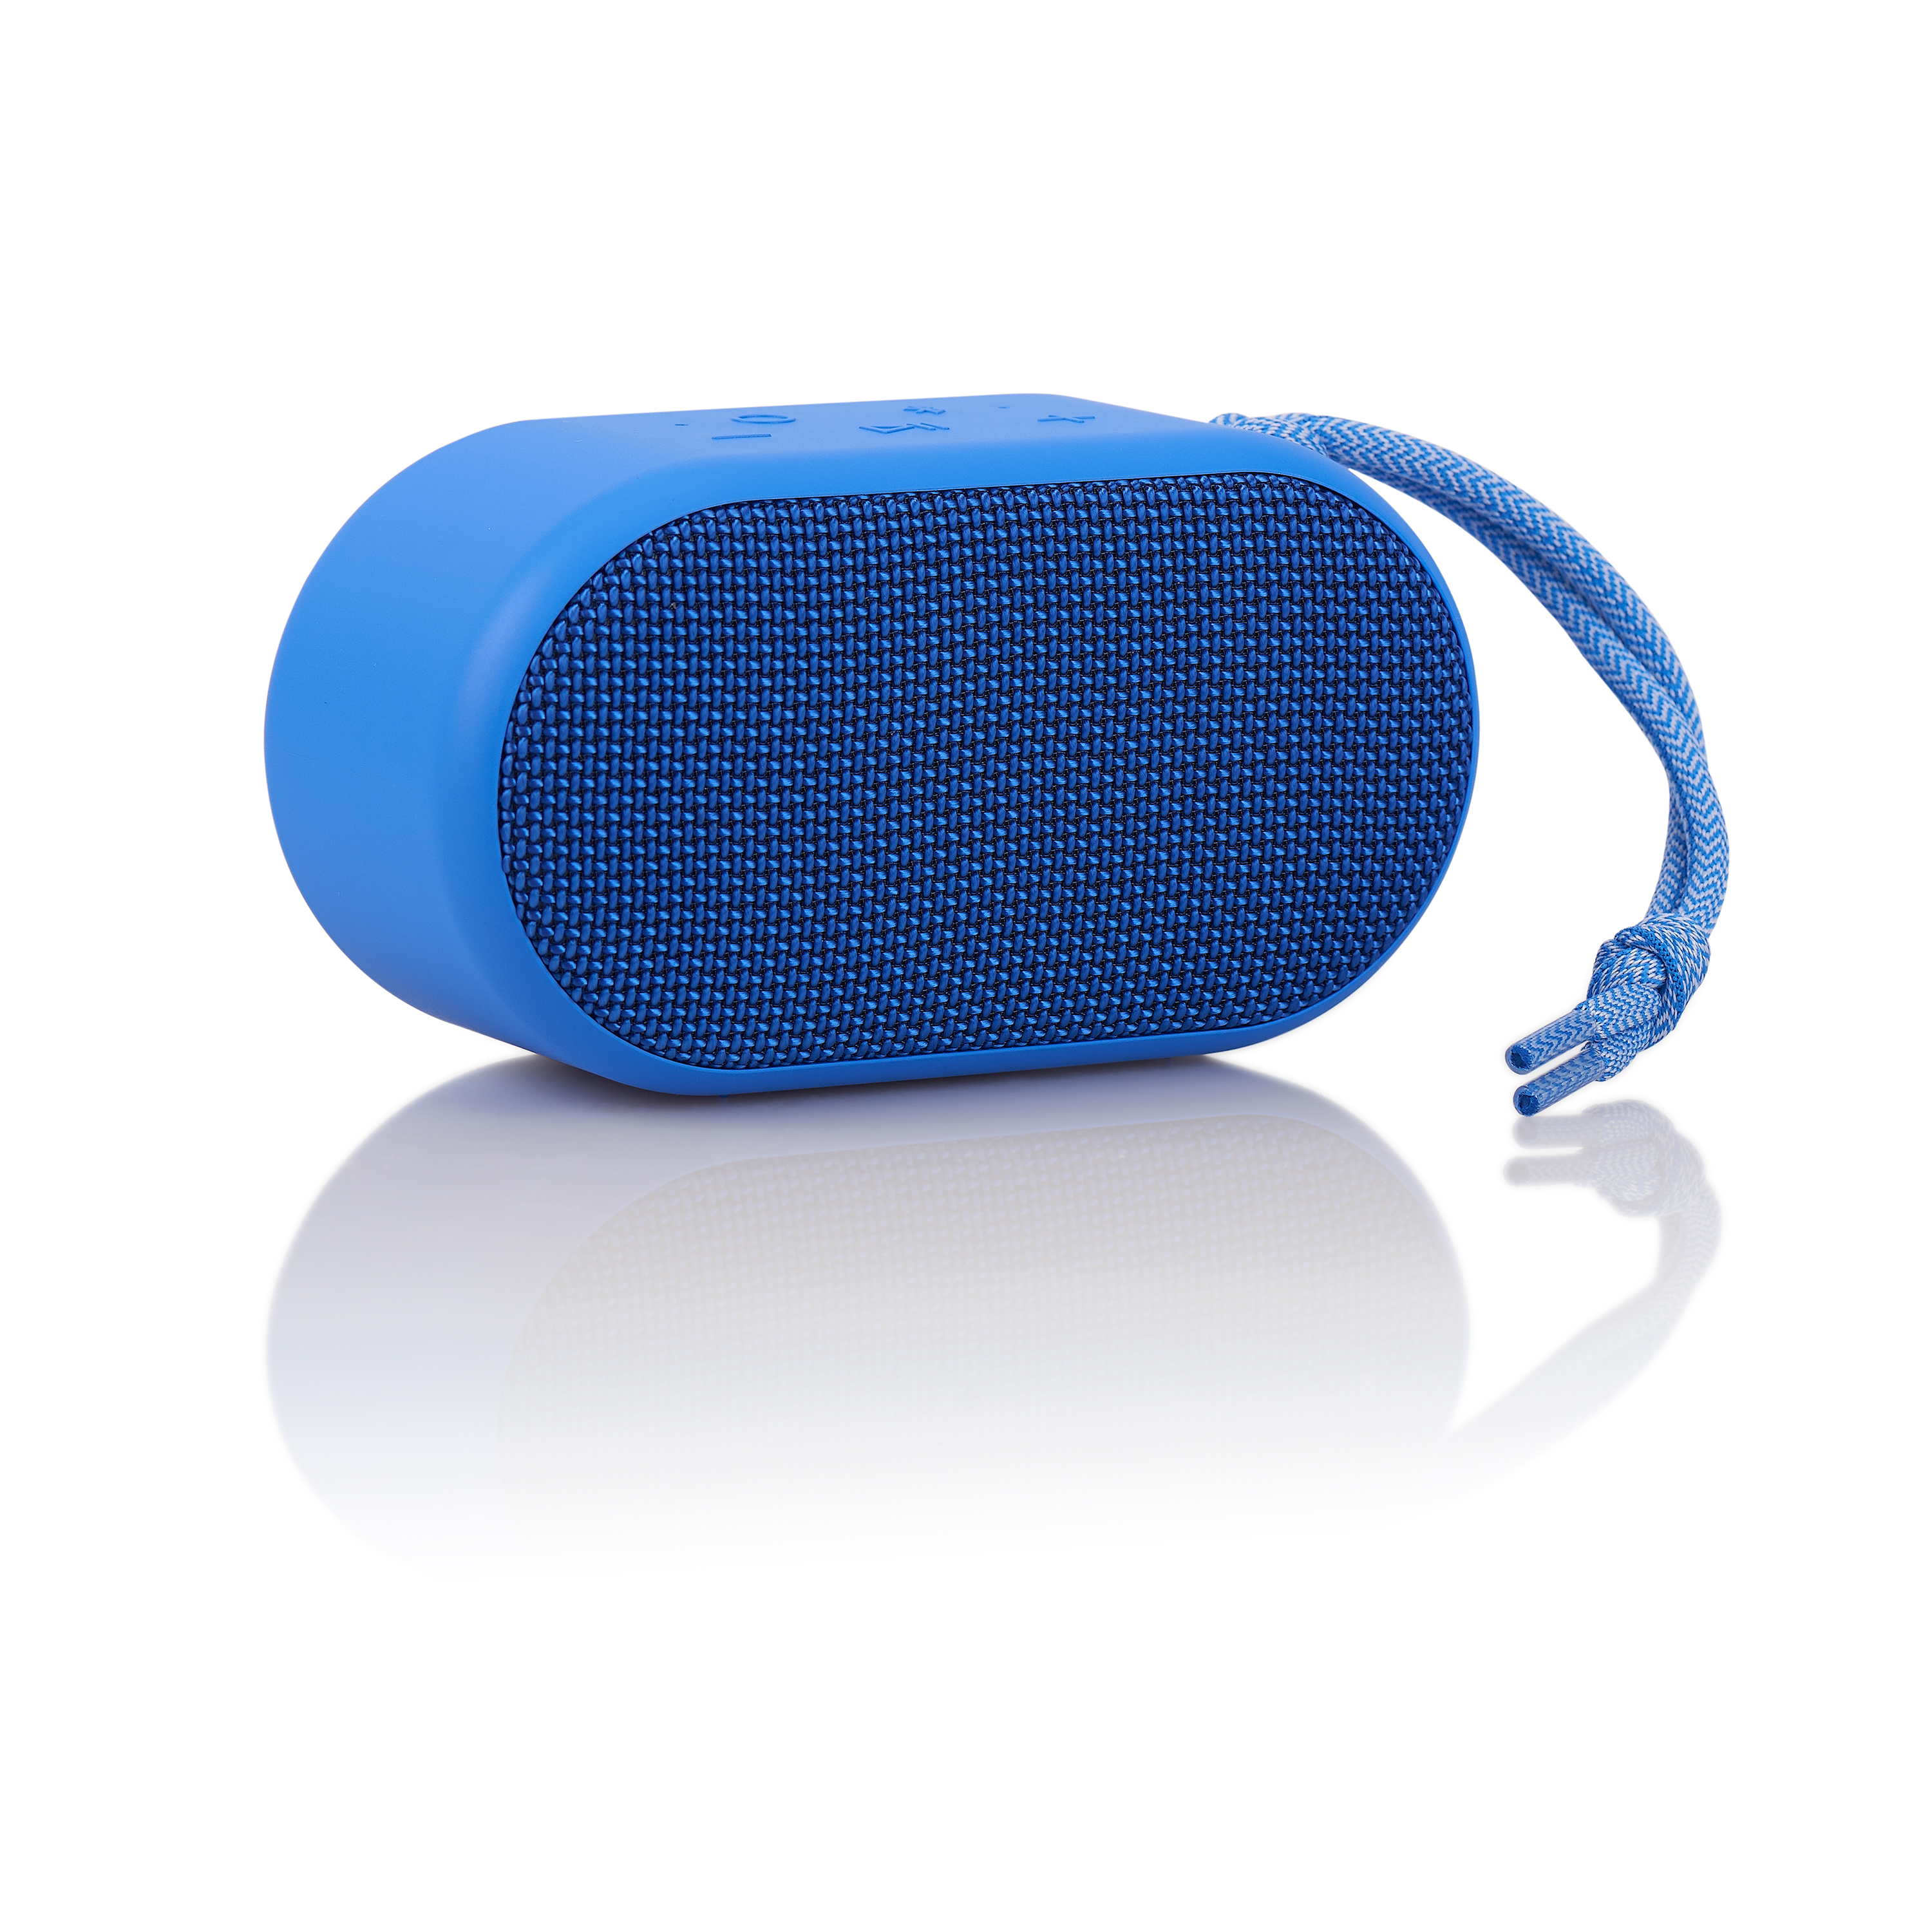 onn. Small Rugged Portable Bluetooth Speaker, Cobalt - image 3 of 4